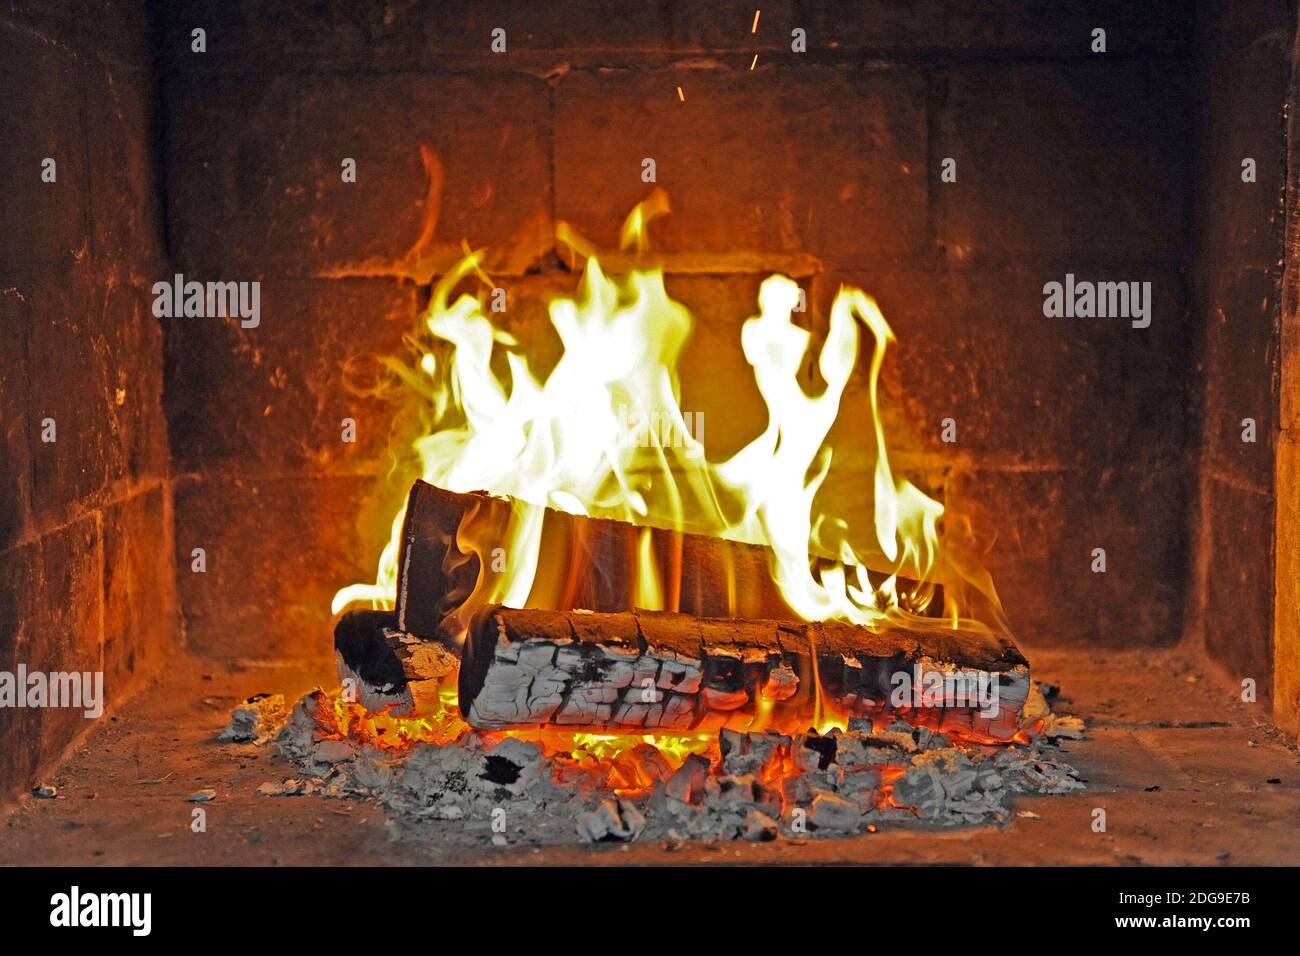 Holzfeuer in einem offenen Kamin, Kaminfeuer, Banque D'Images